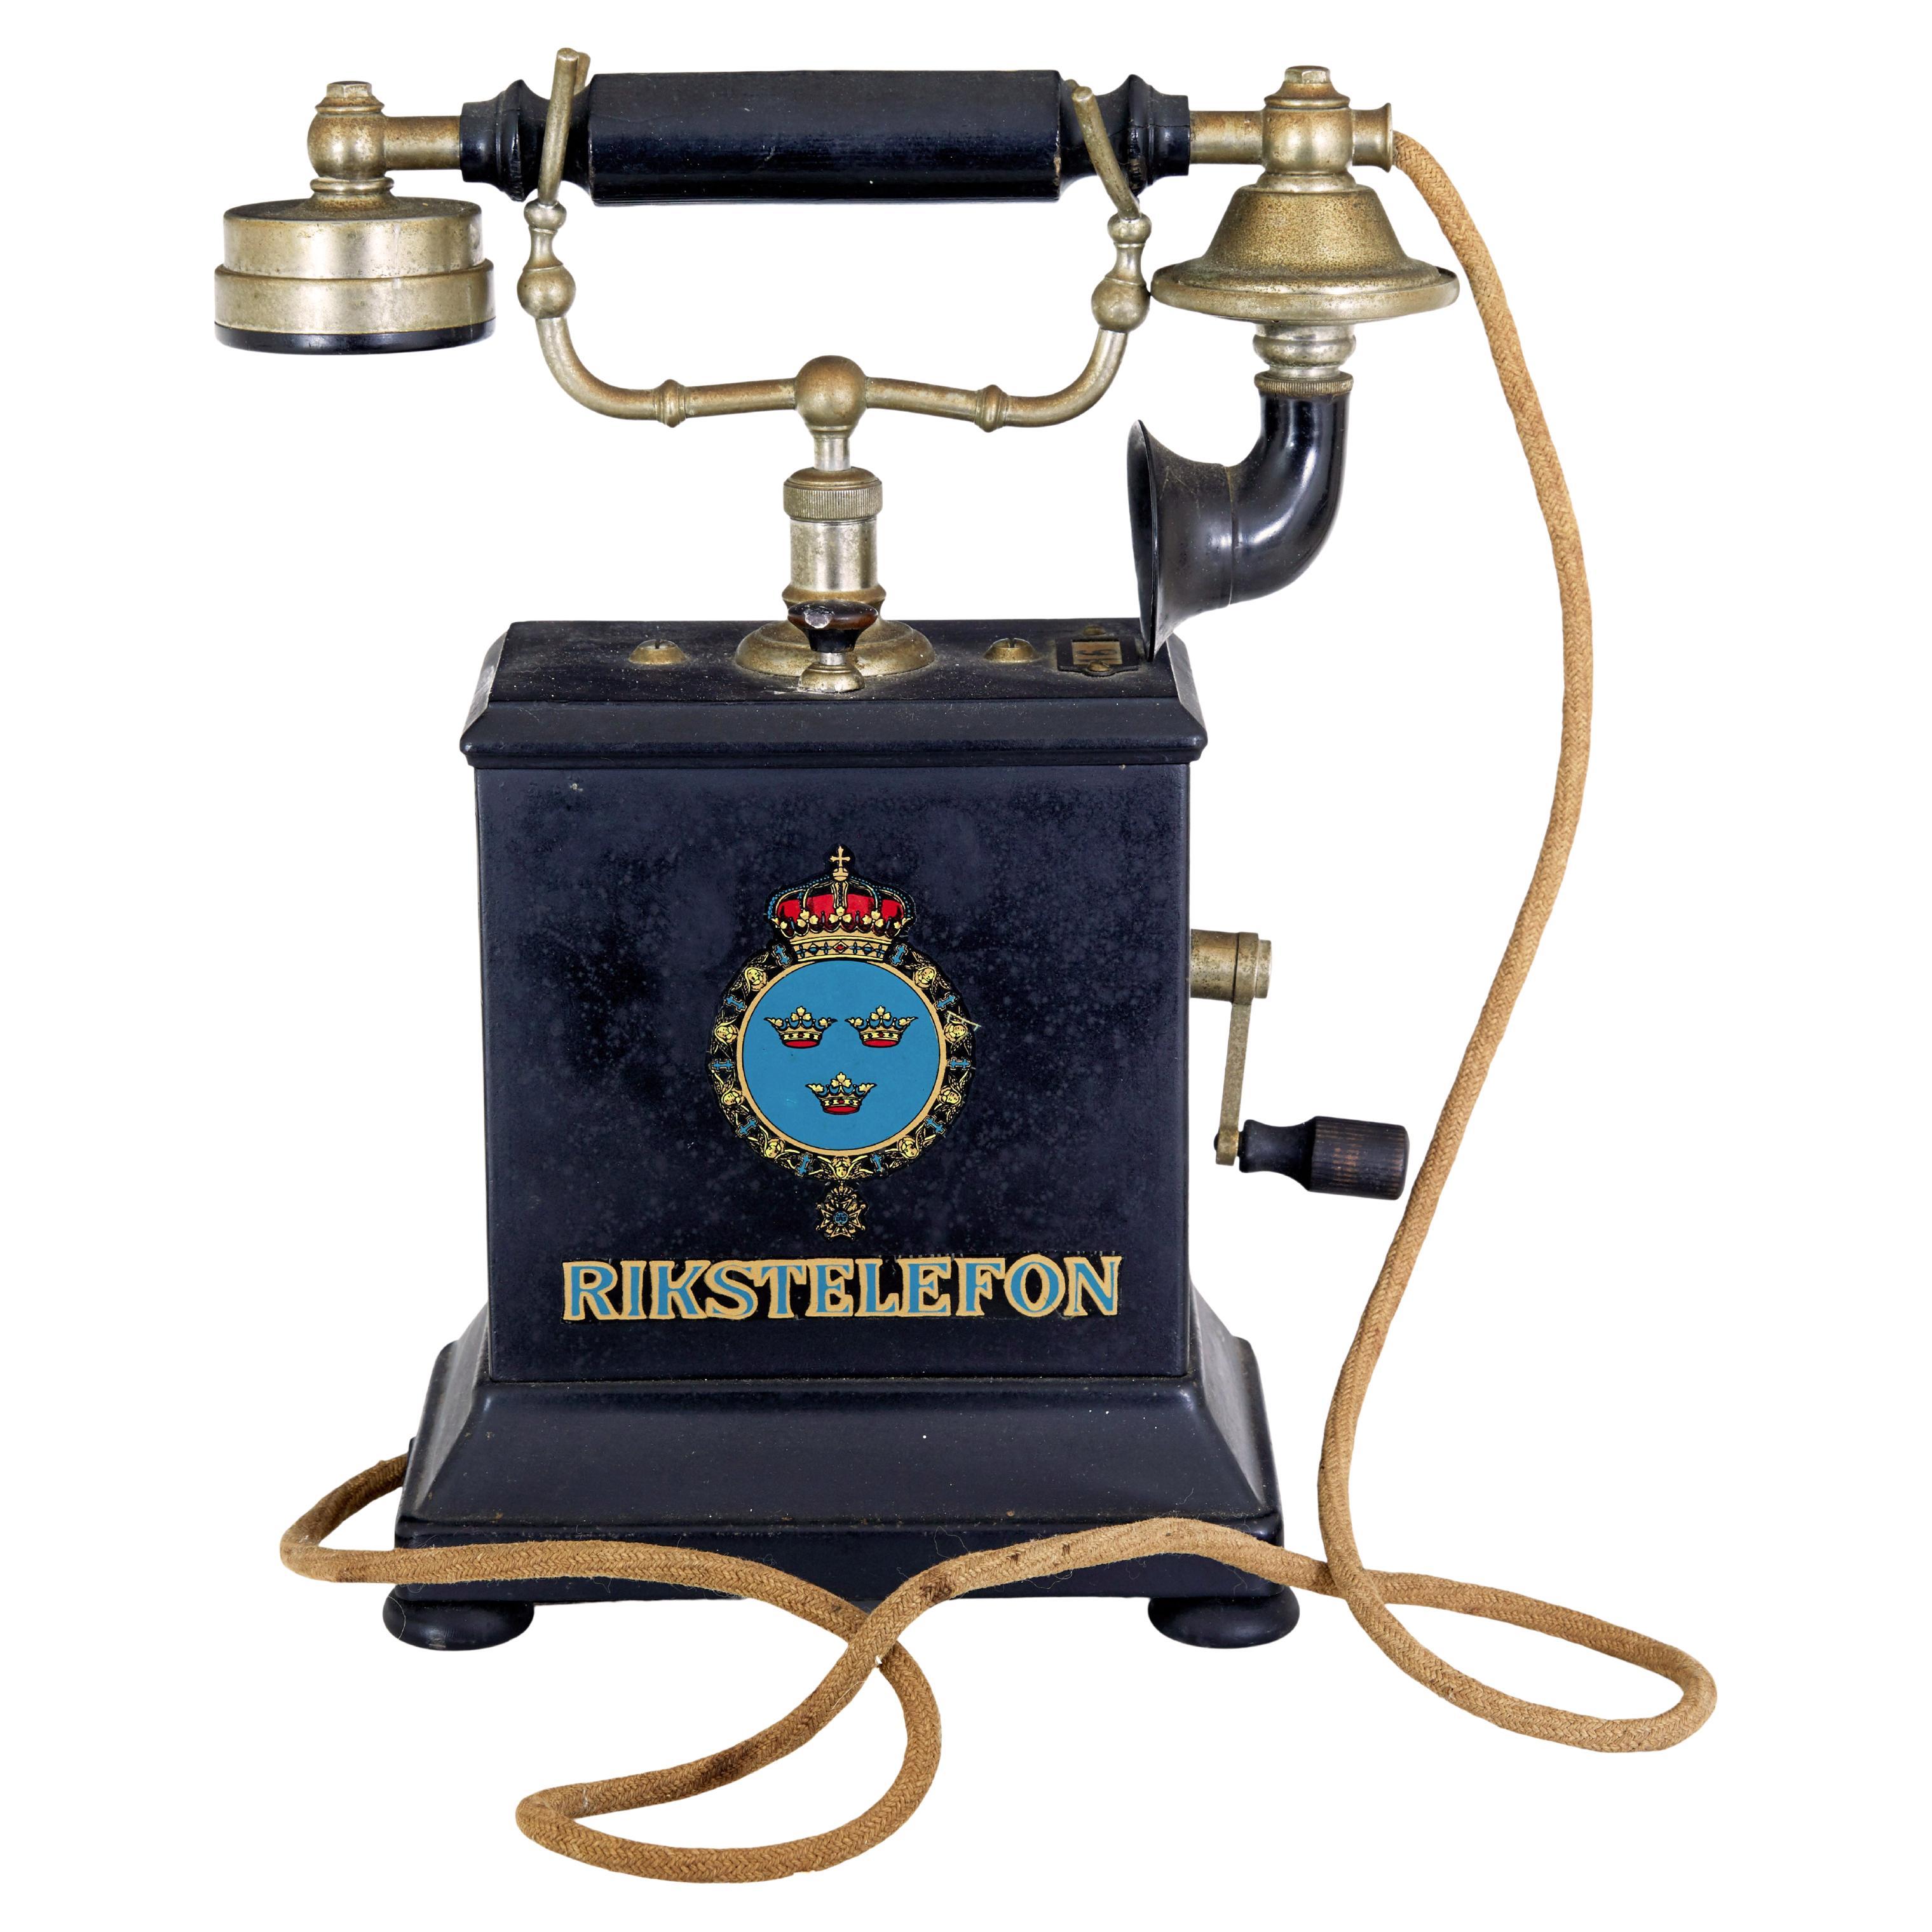 Early 20th century Swedish metal telephone by Rikstelefon